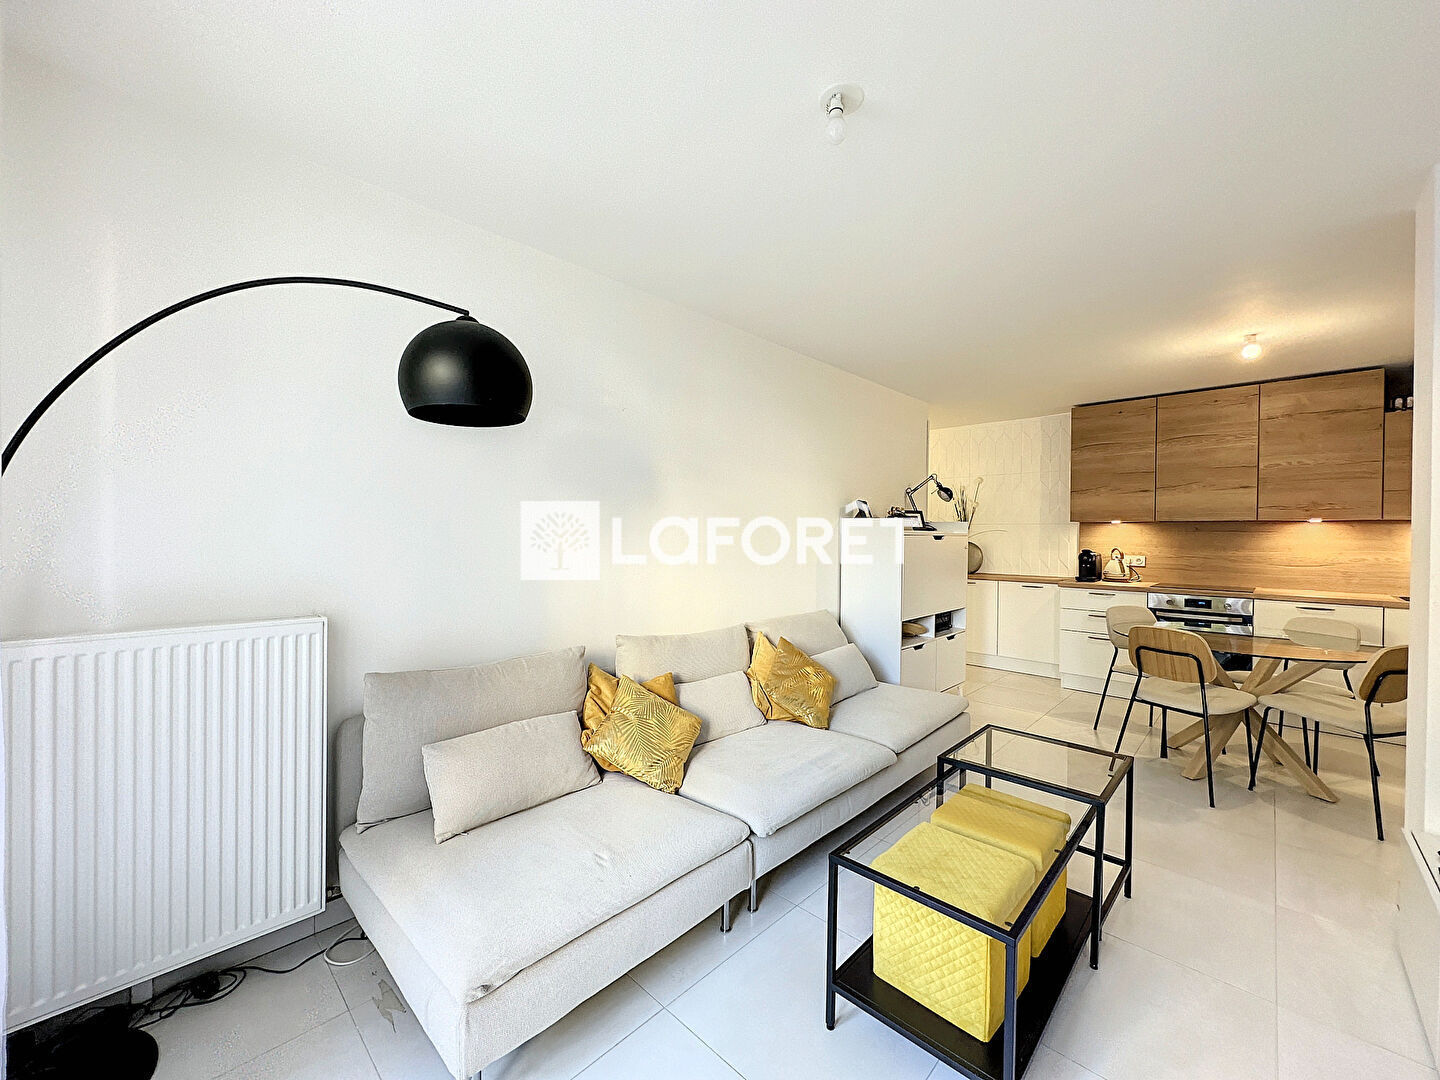 Appartement a louer malakoff - 2 pièce(s) - 46 m2 - Surfyn